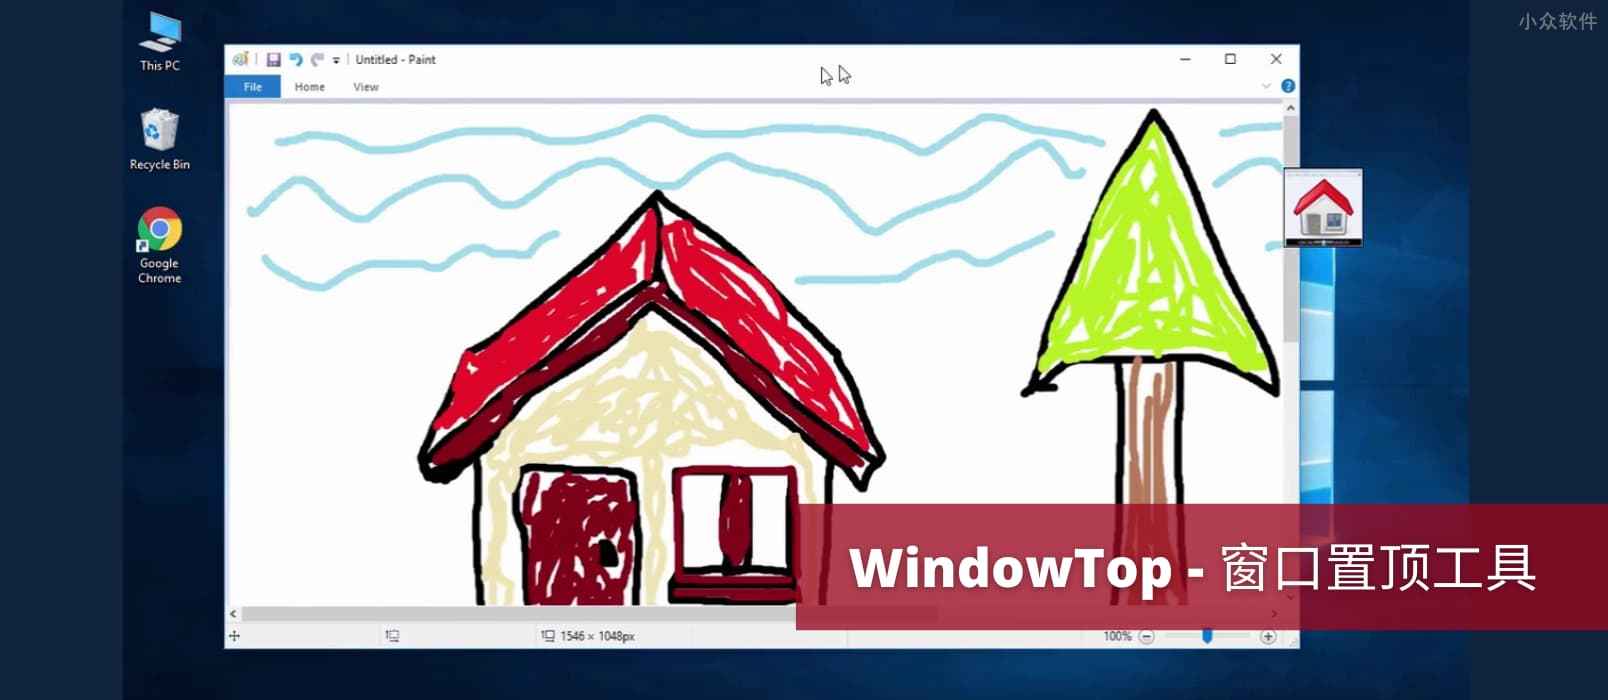 WindowTop – 窗口置顶工具：透明、鼠标穿透、画中画、深色模式、毛玻璃效果，功能有点强